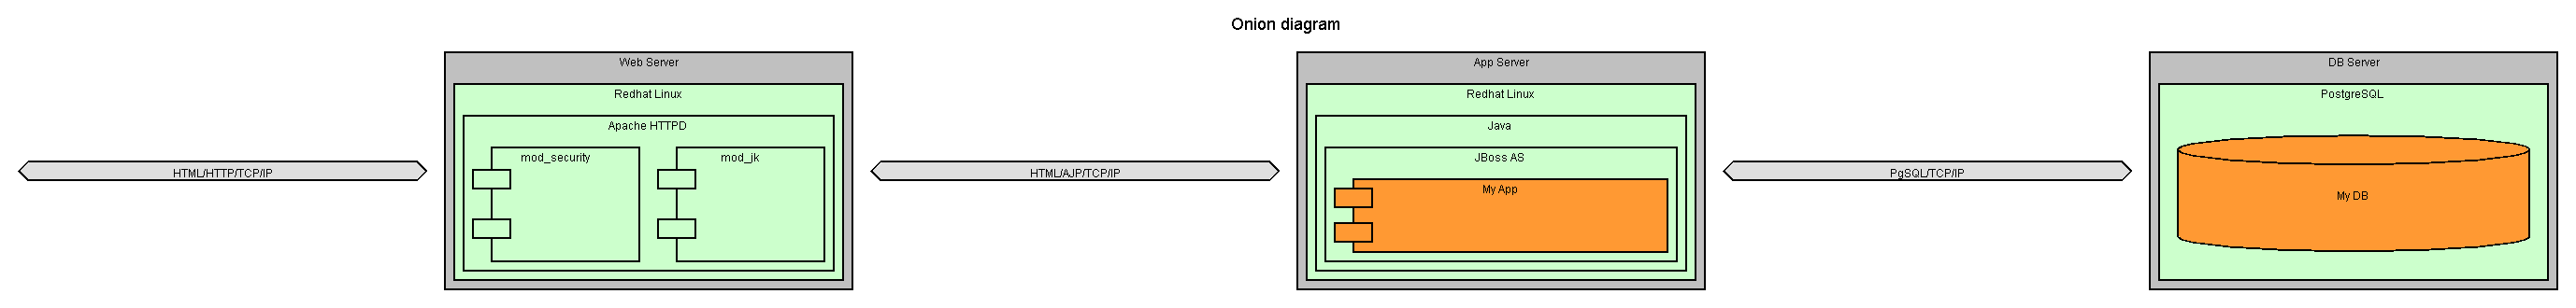 Onion diagram